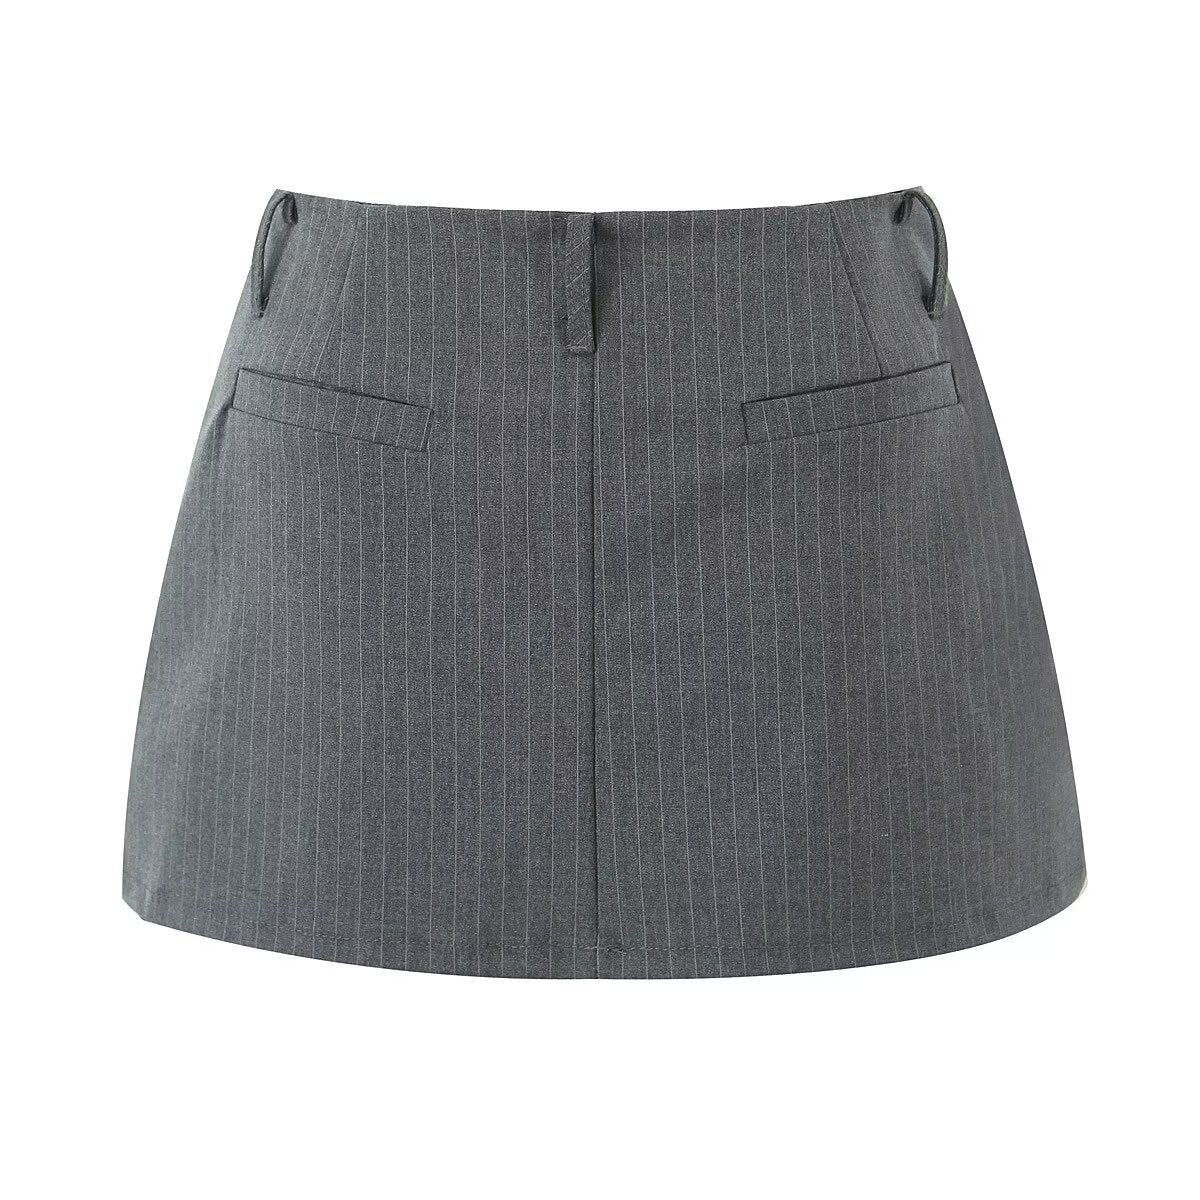 Retro Low-Waist Vertical Stripes Mini Sheath A-Line Skirt for Women